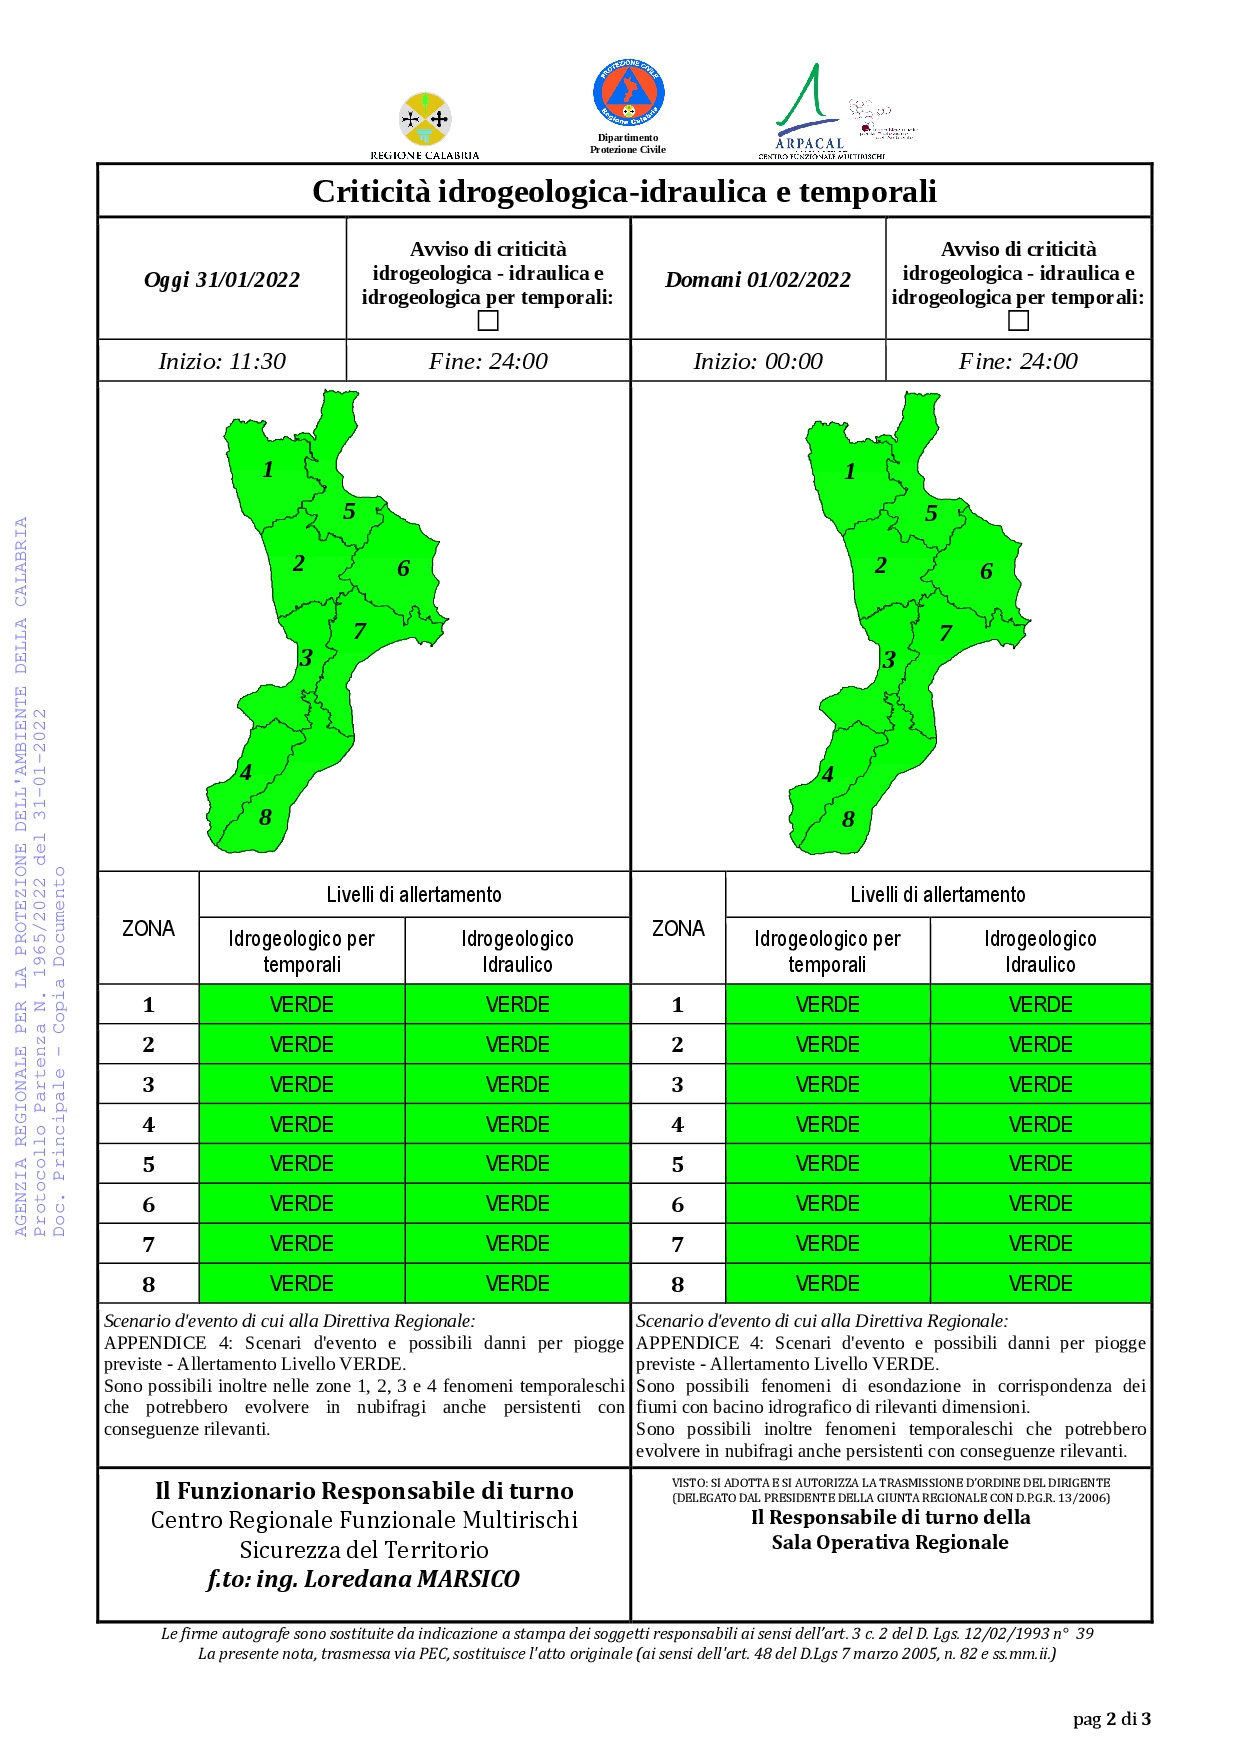 Criticità idrogeologica-idraulica e temporali in Calabria 31-01-2022